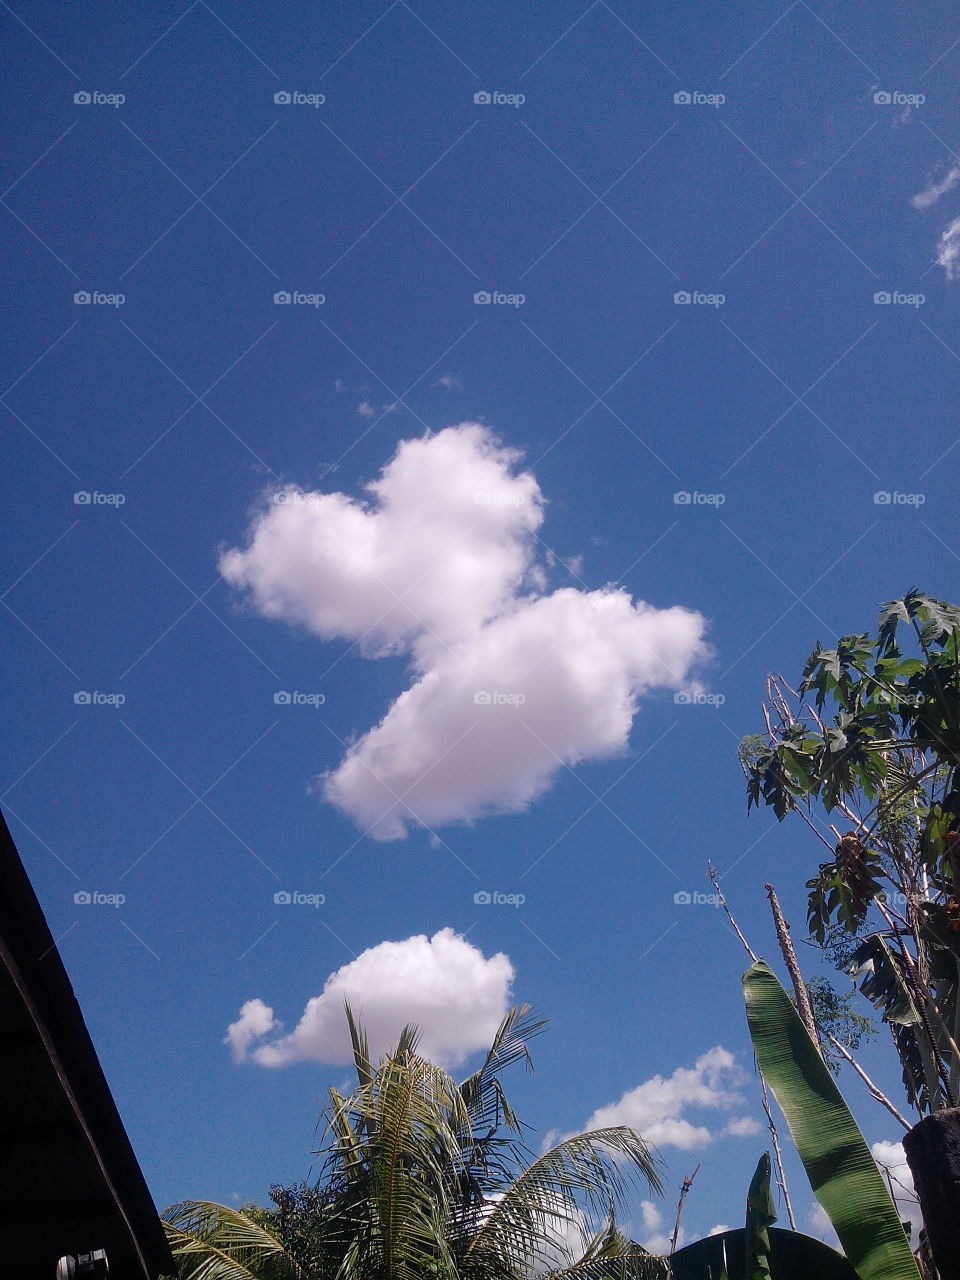 clouds shape of heart